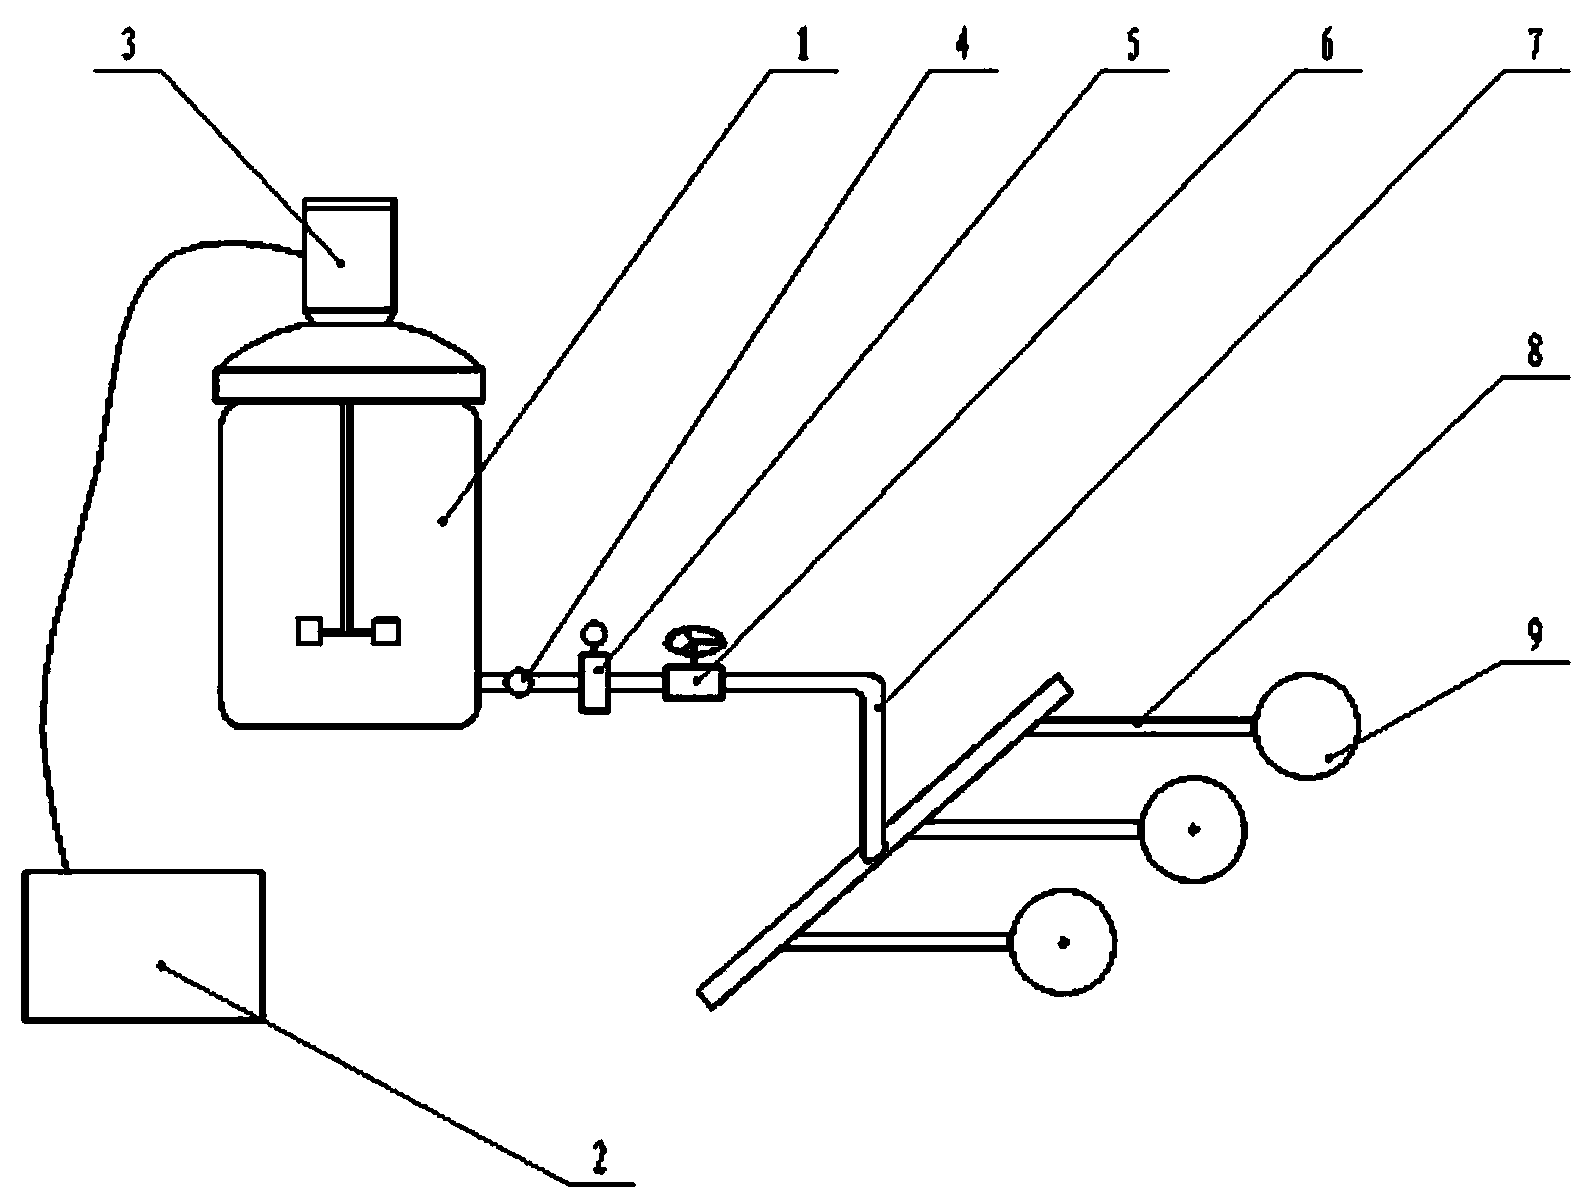 Self-pressing simple drip irrigation system